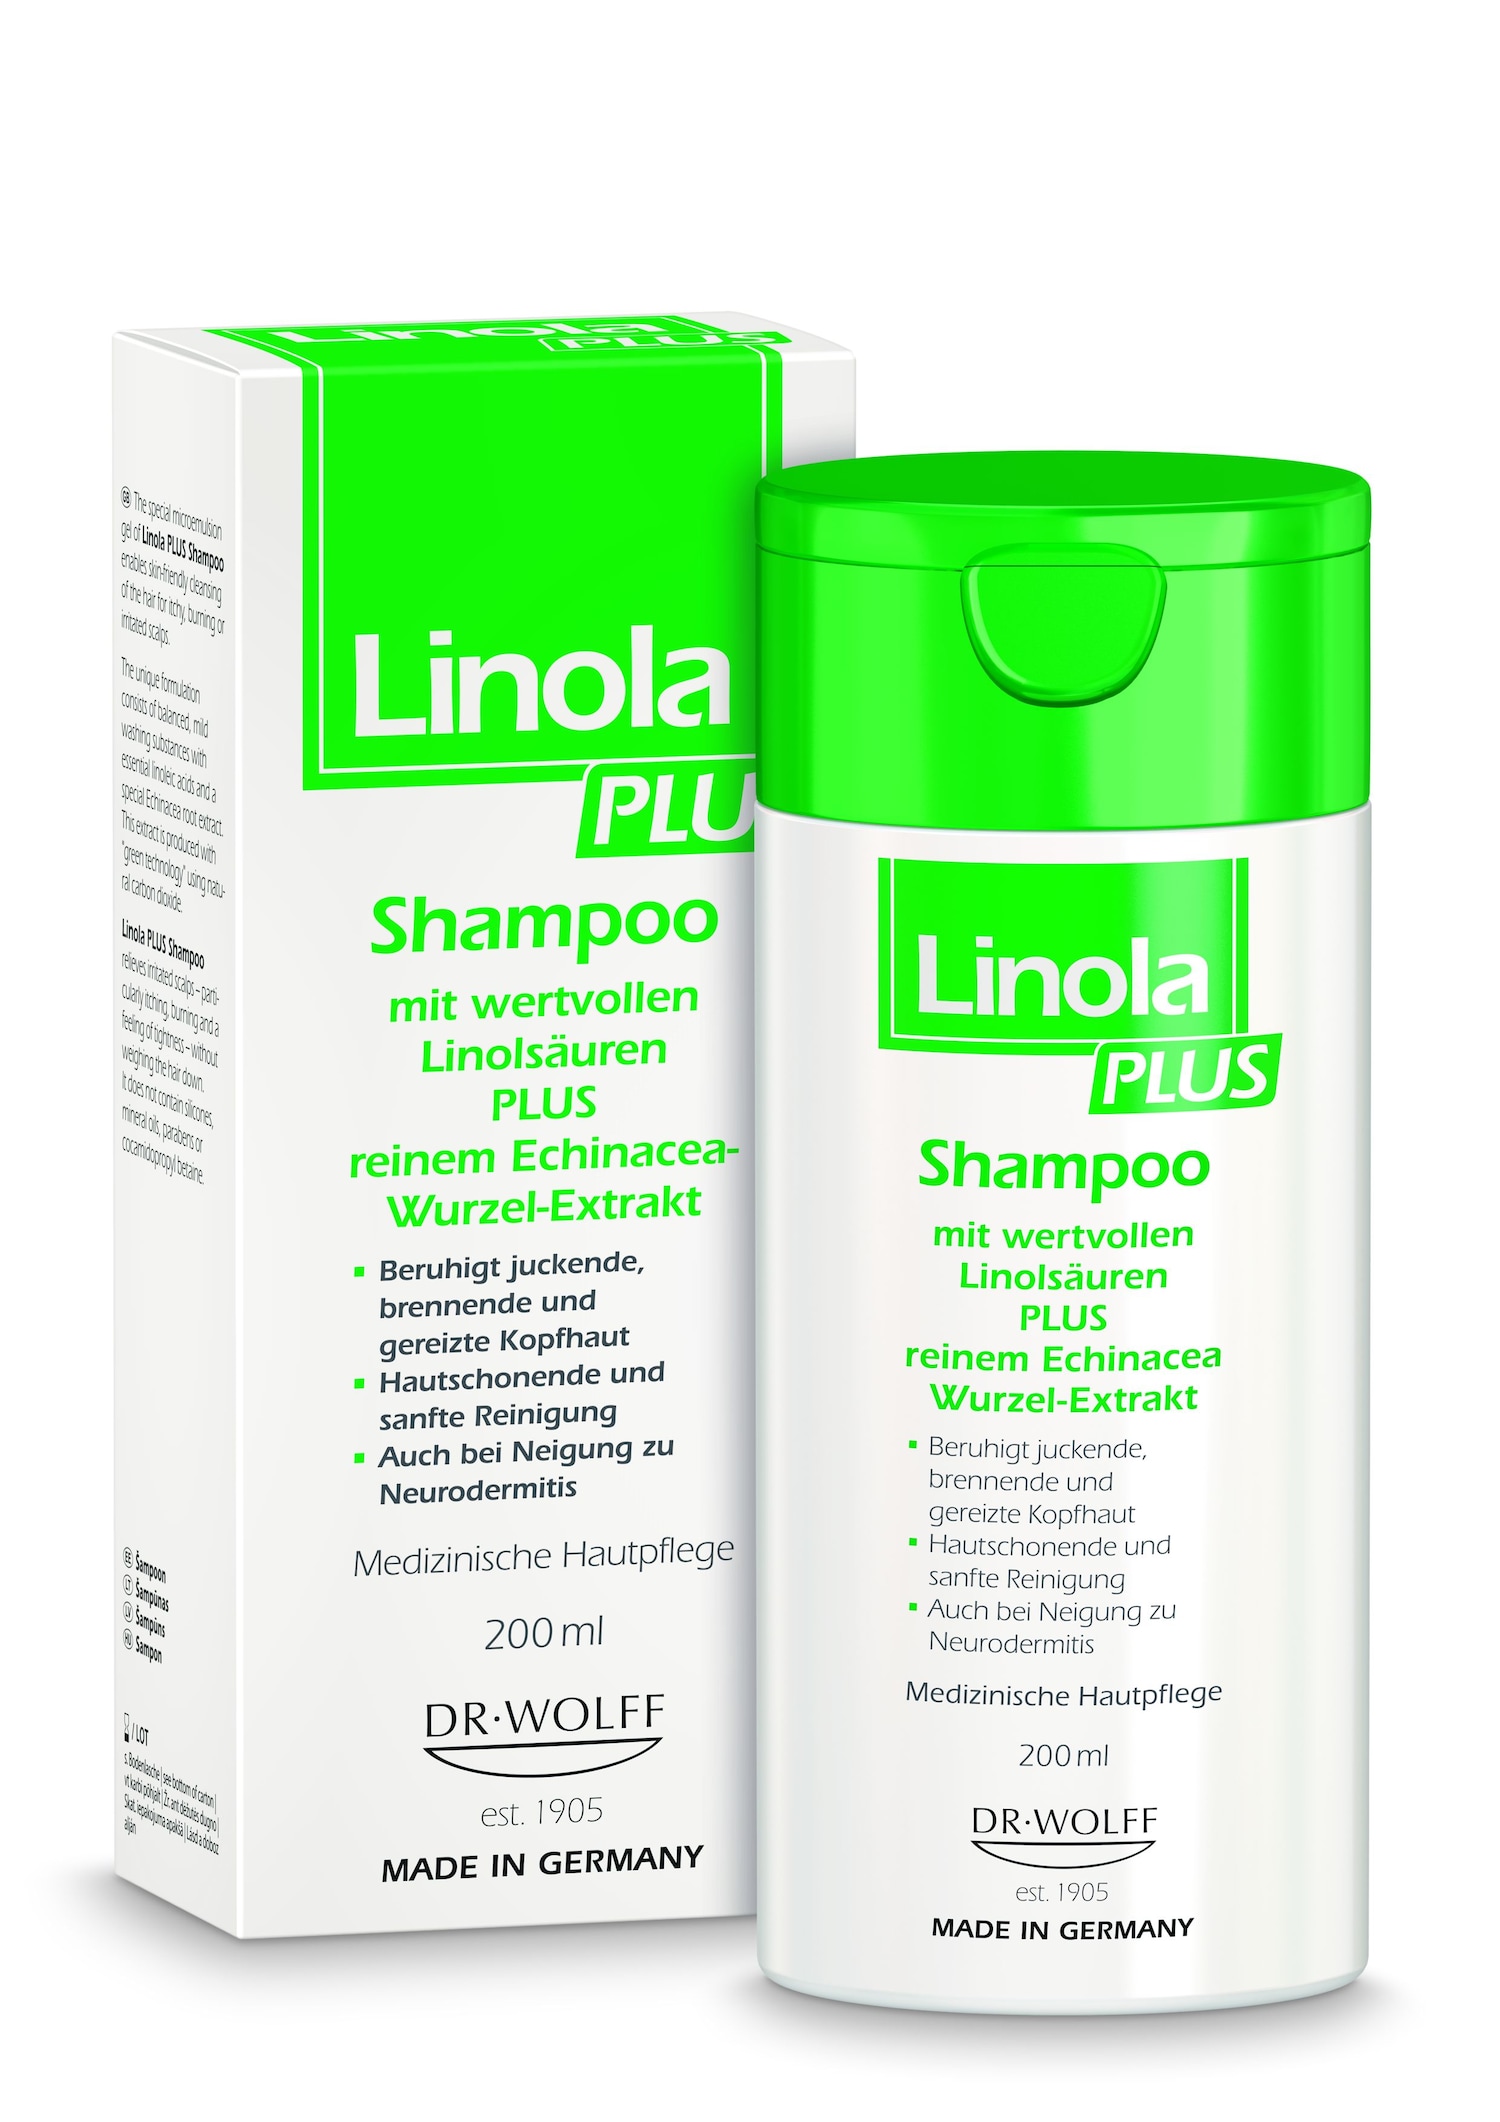 Linola PLUS shampoo